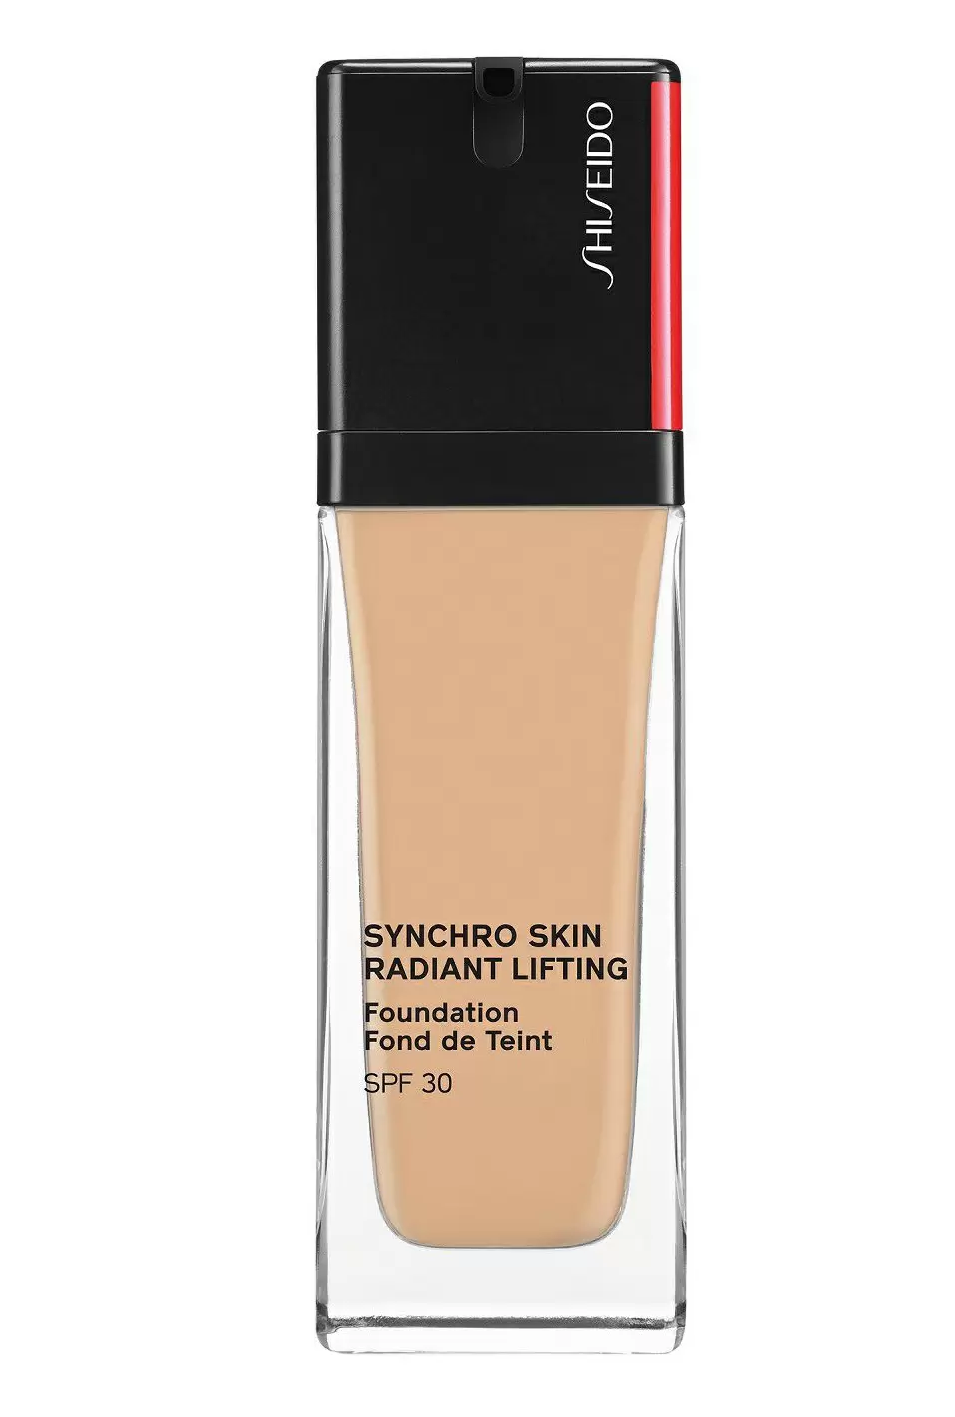 Shiseido Тональное средство Synchro Skin Radiant Lifting, SPF 30, 30 мл, оттенок: 240